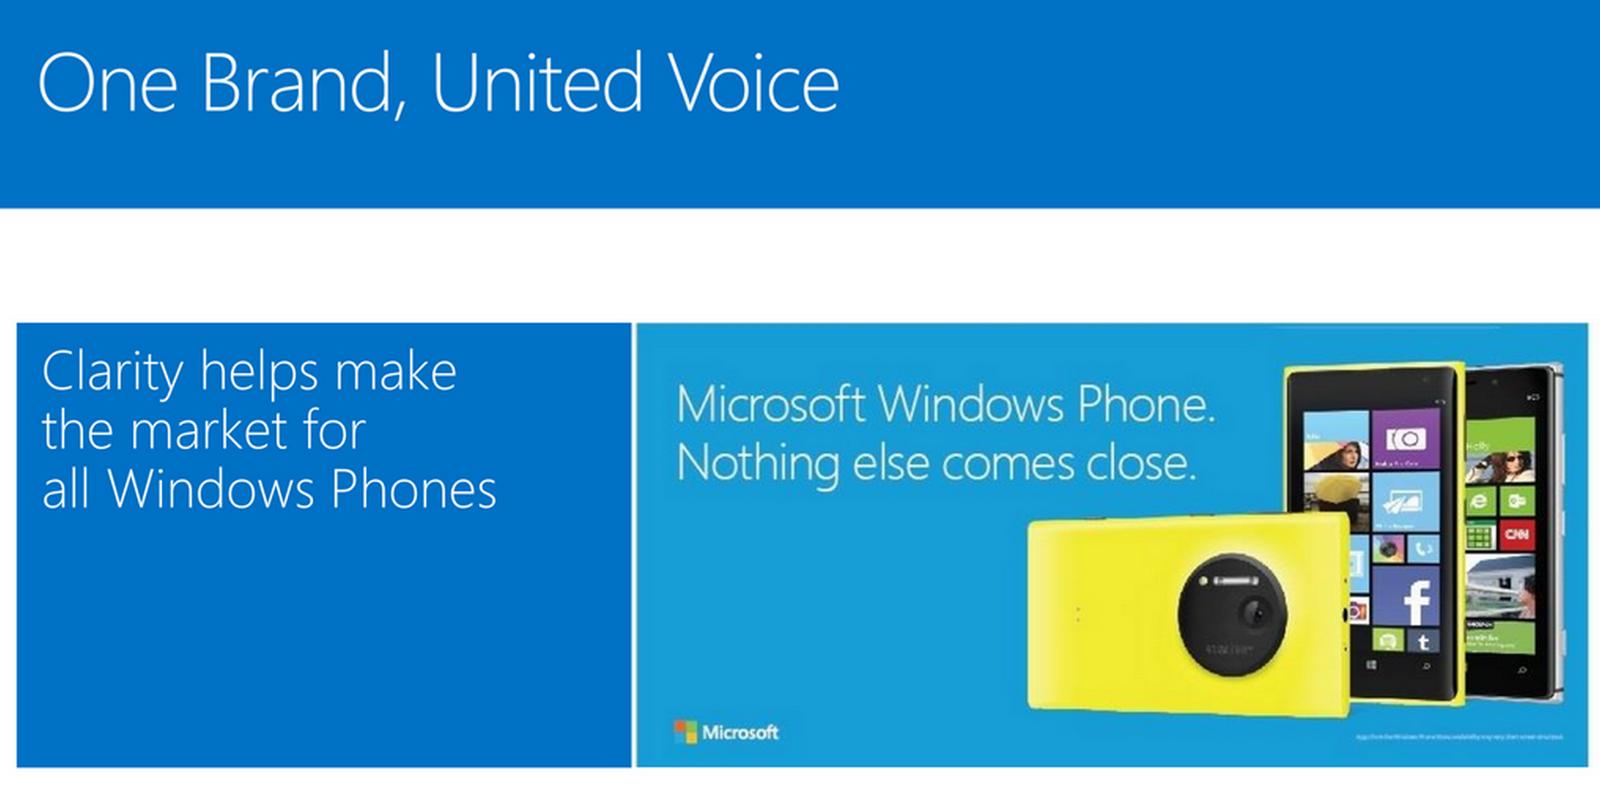 Microsoft and Nokia: No Surprises